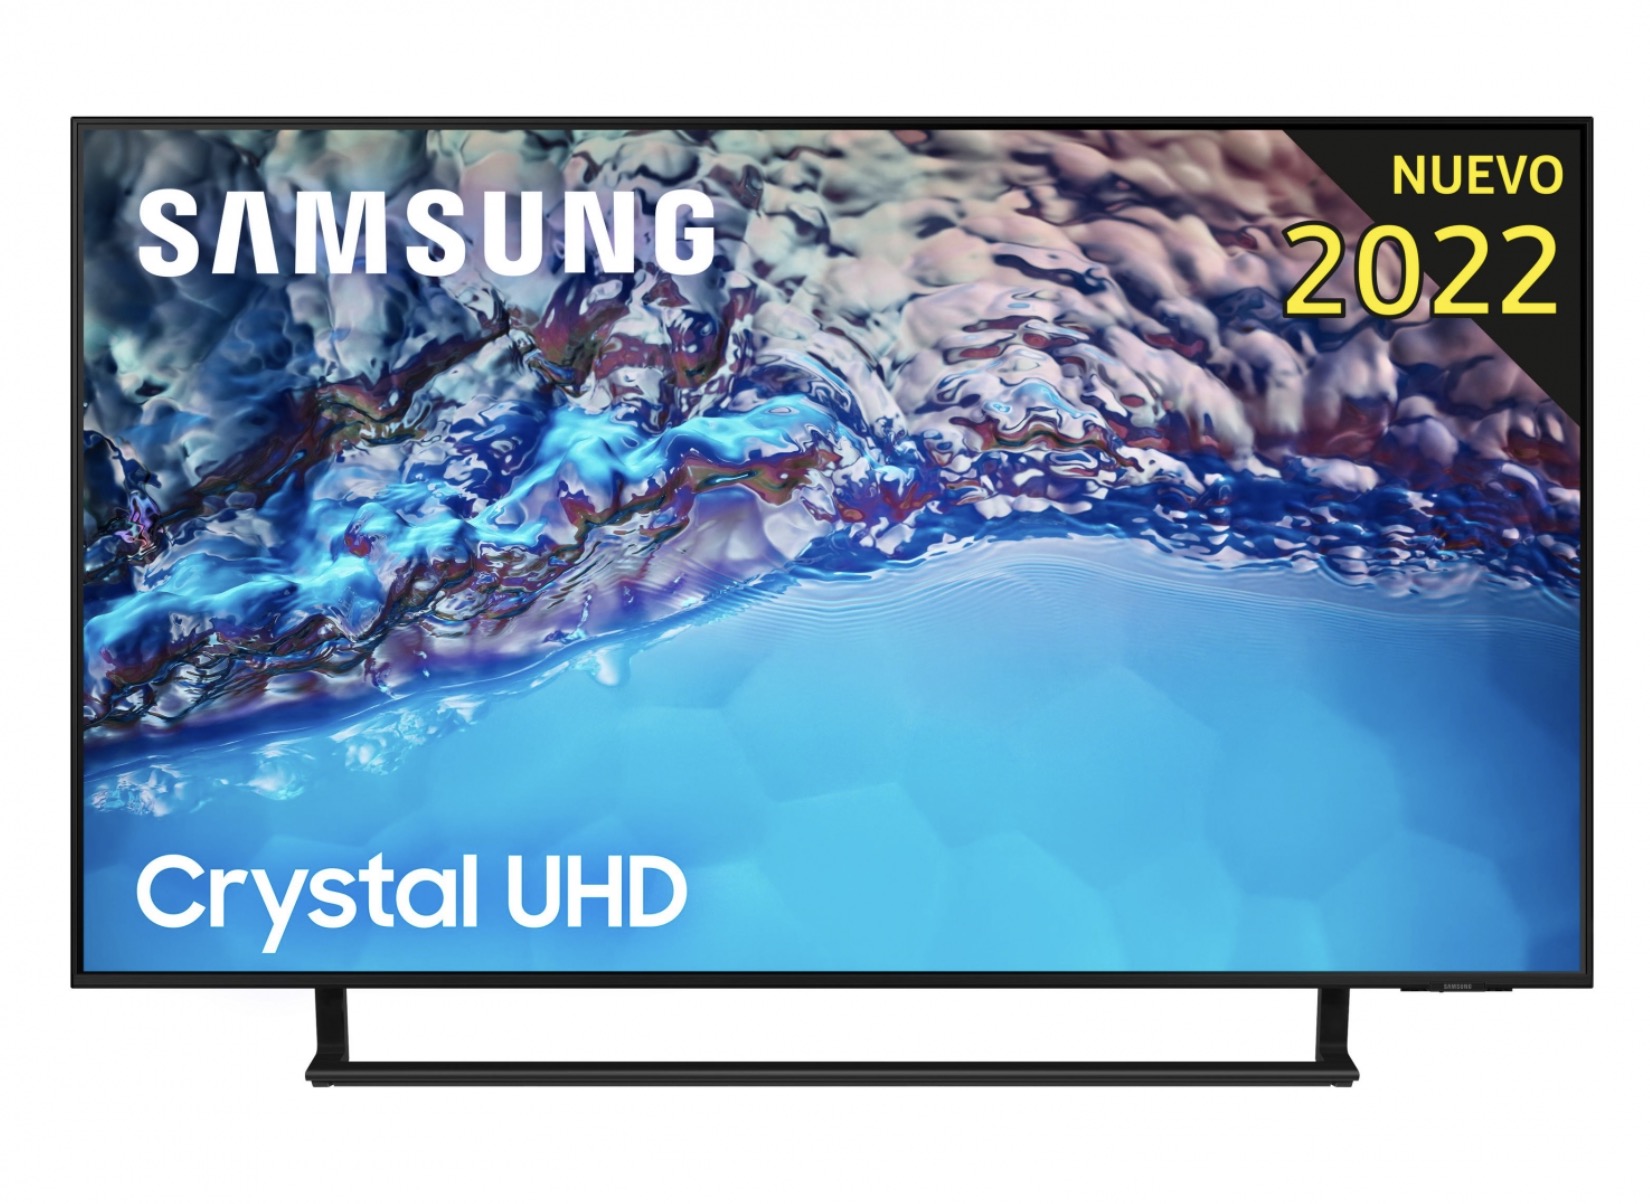 TV Samsung 4k 2022